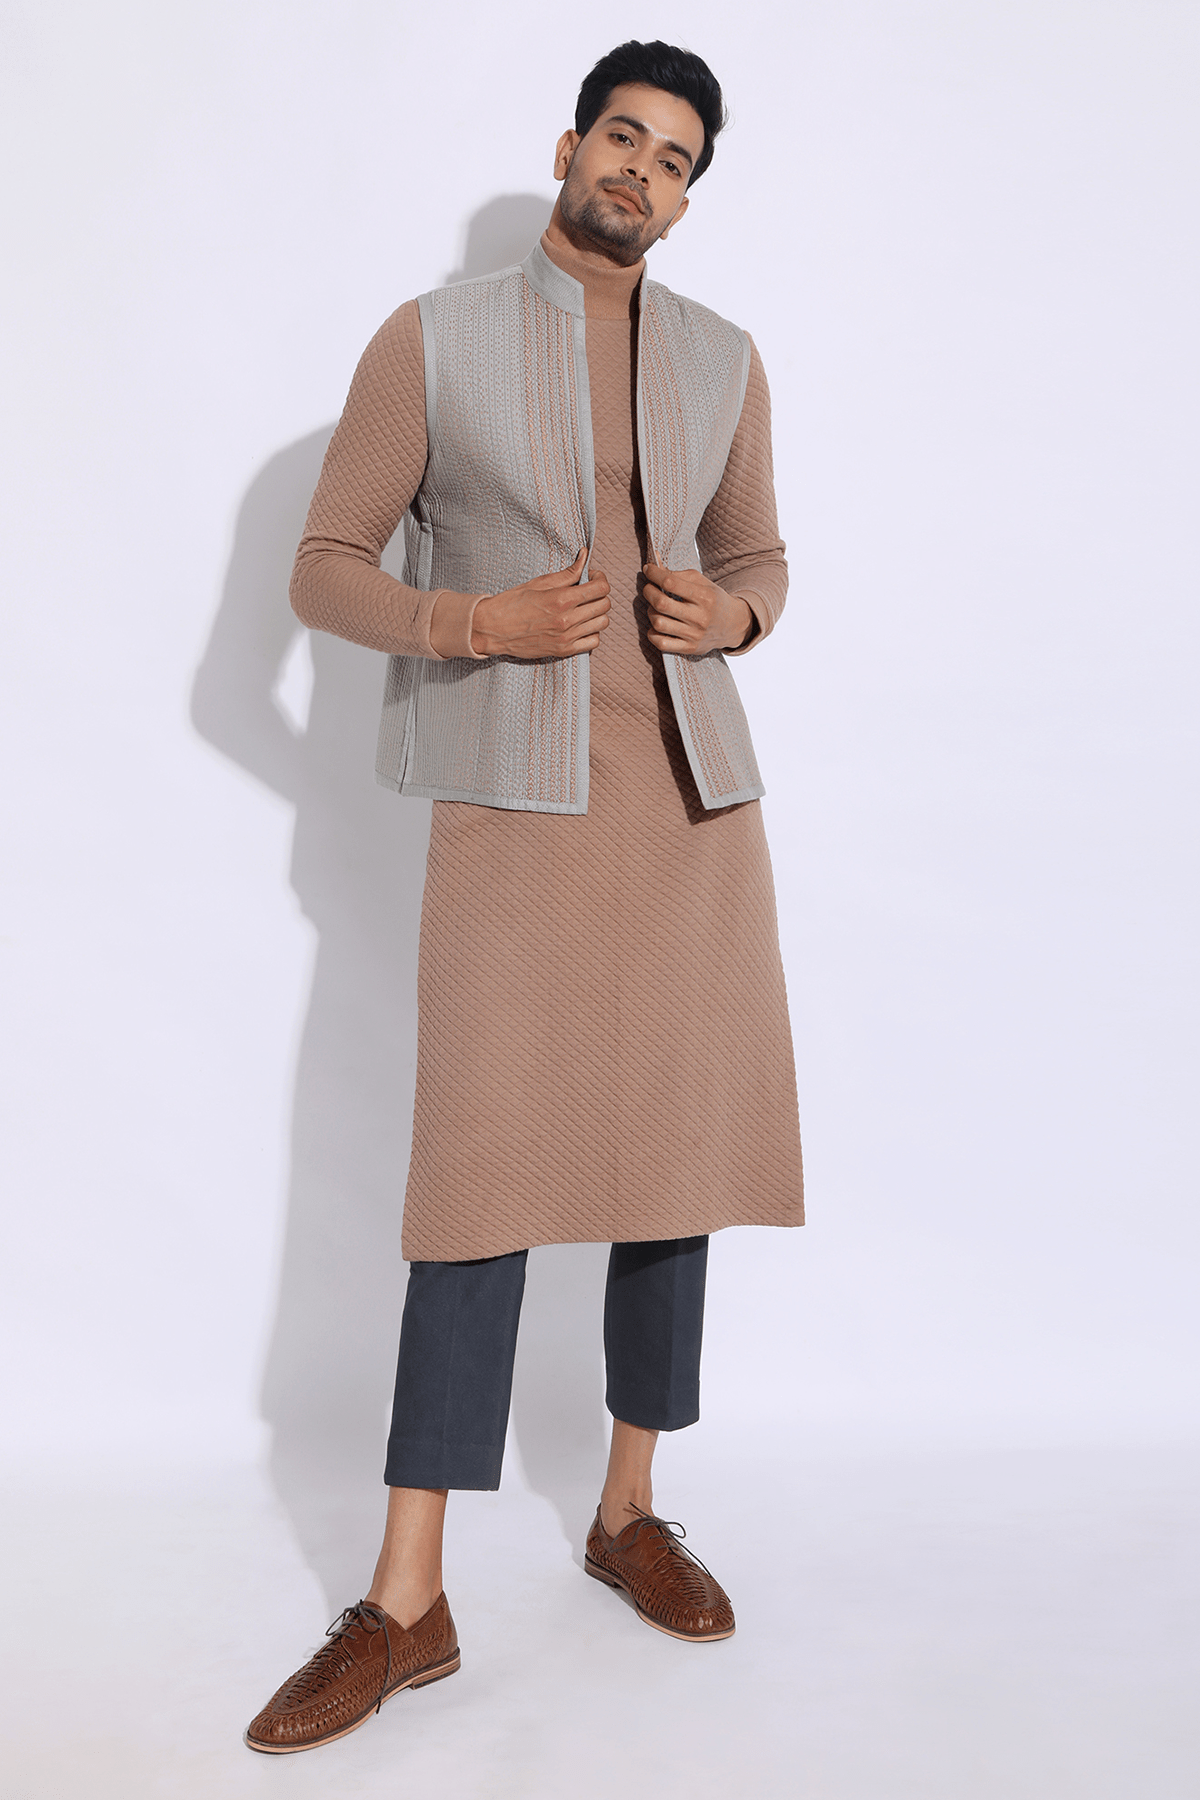 Textured Bandi Jacket - Kunal Anil Tanna